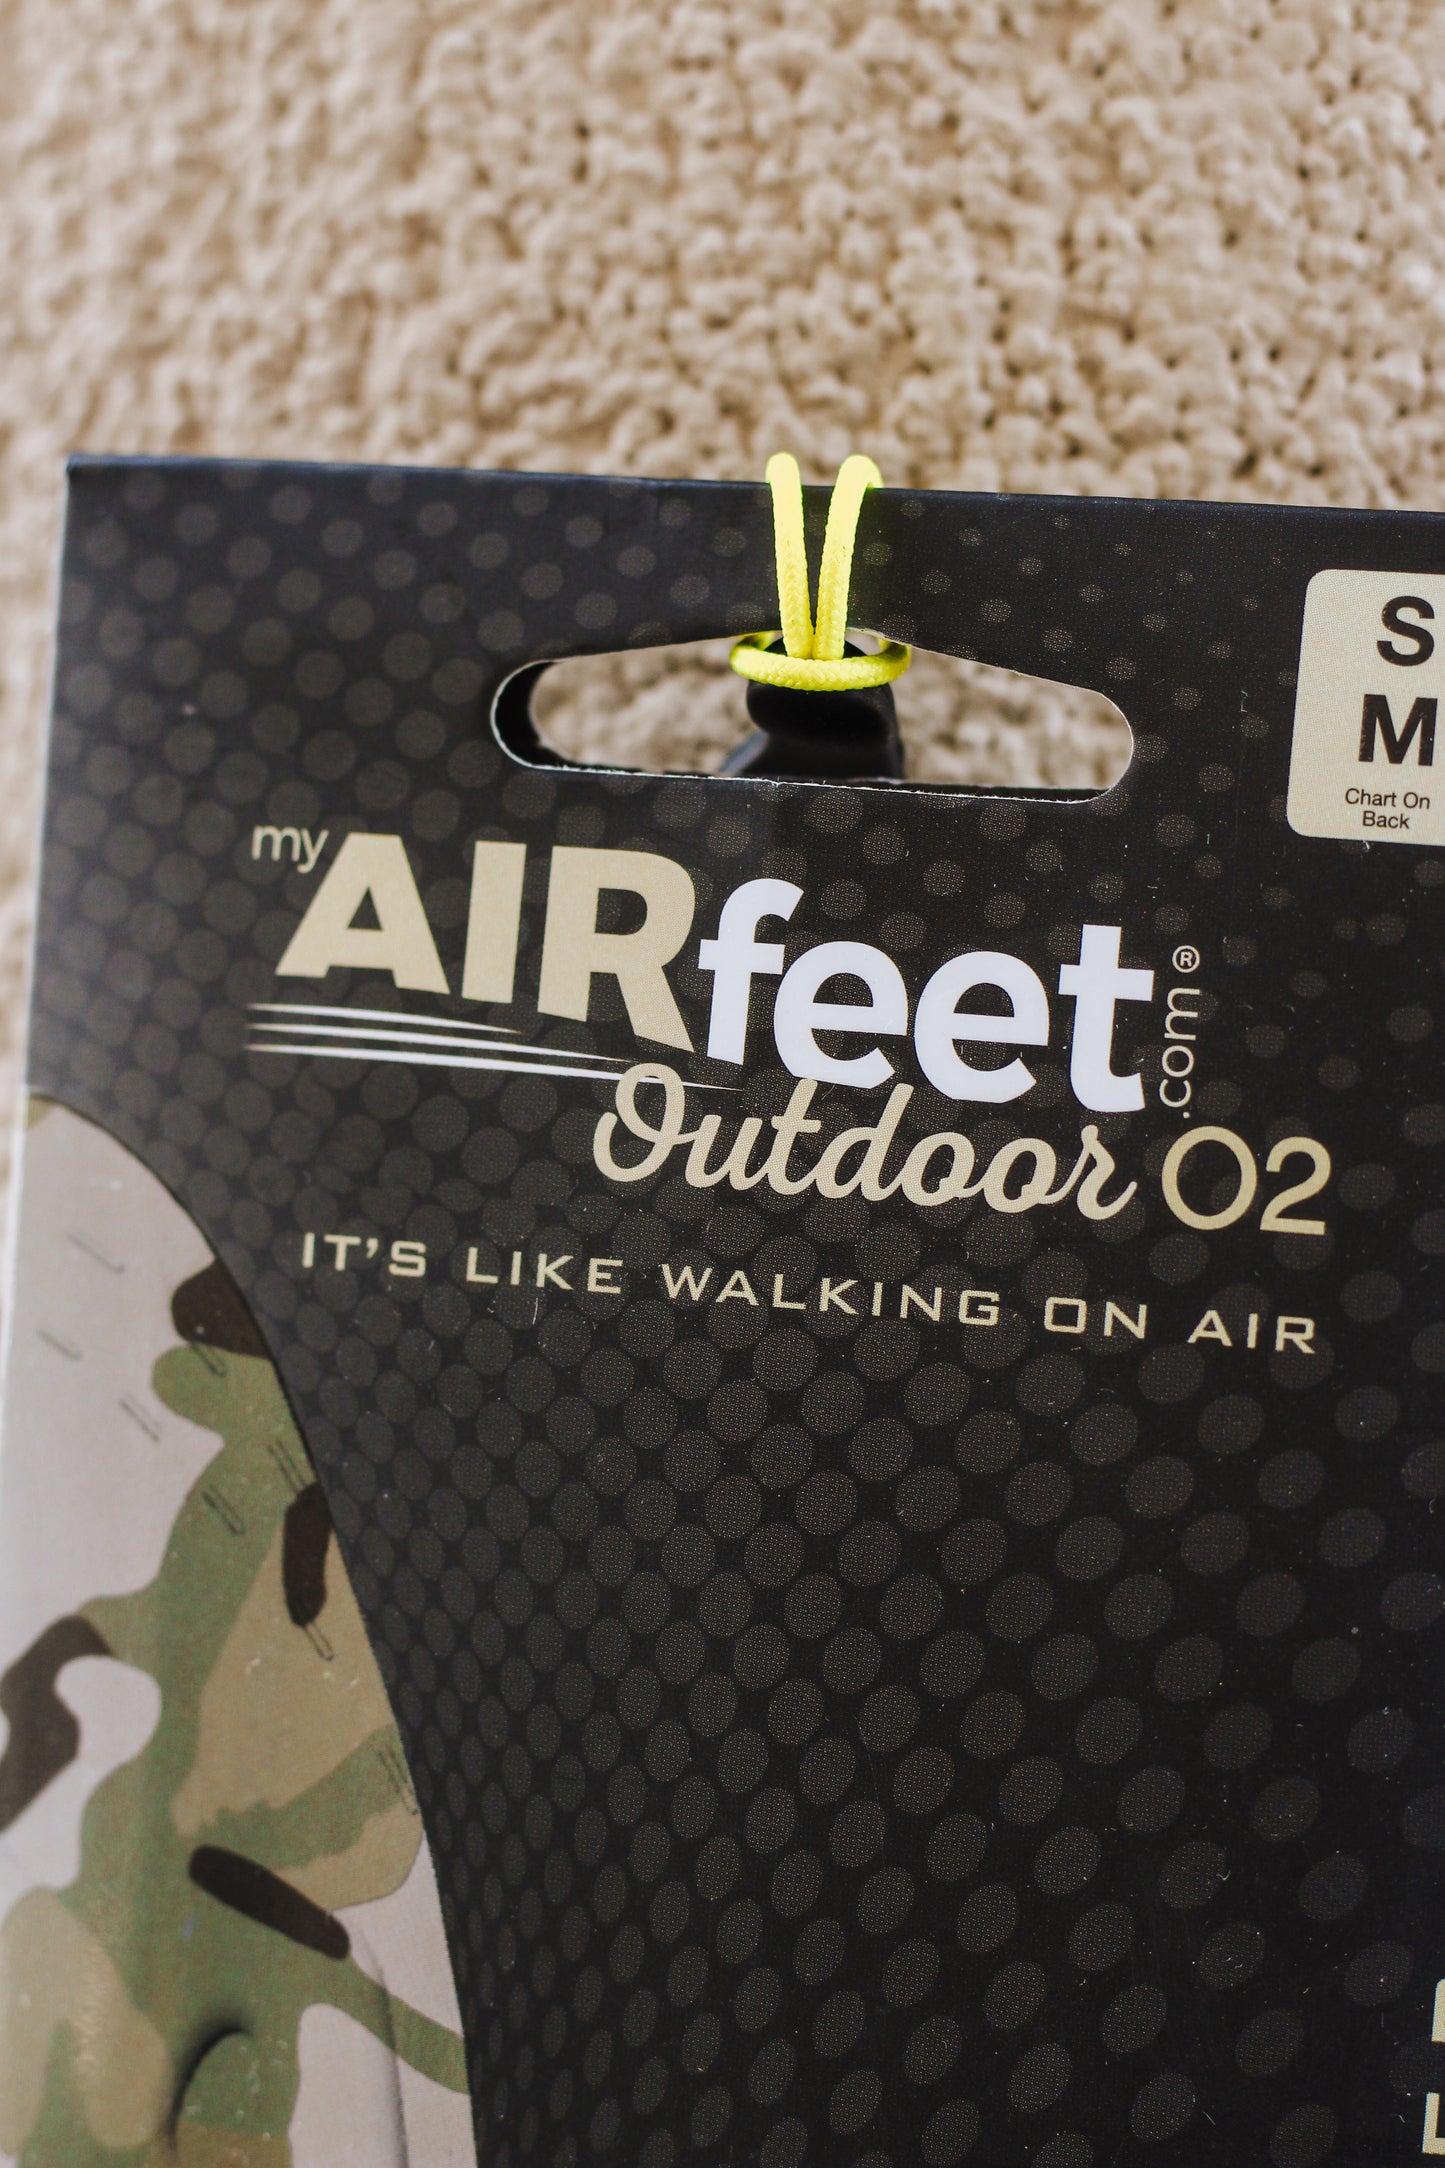 Air Foot Shoe Sole